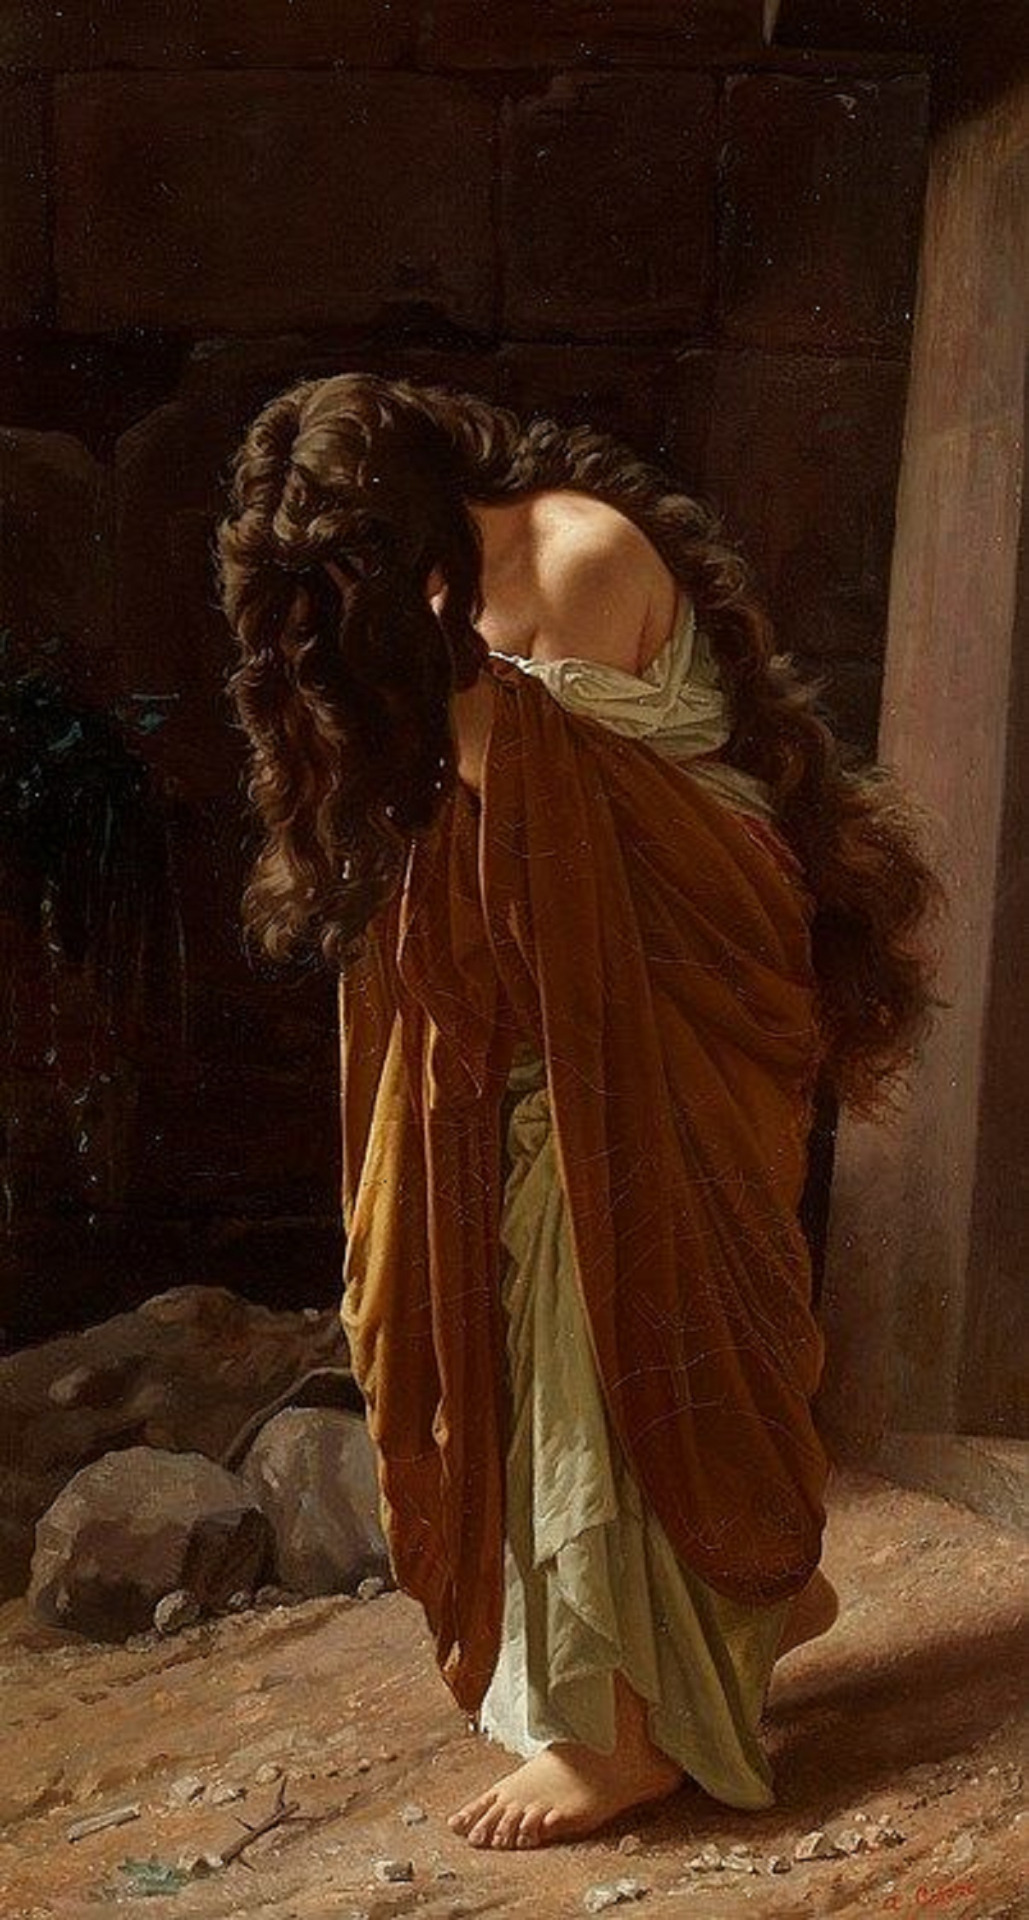 silenceformysoul:
“Antonio Ciseri (1821-1891) - Maddalena, c. 1870
”